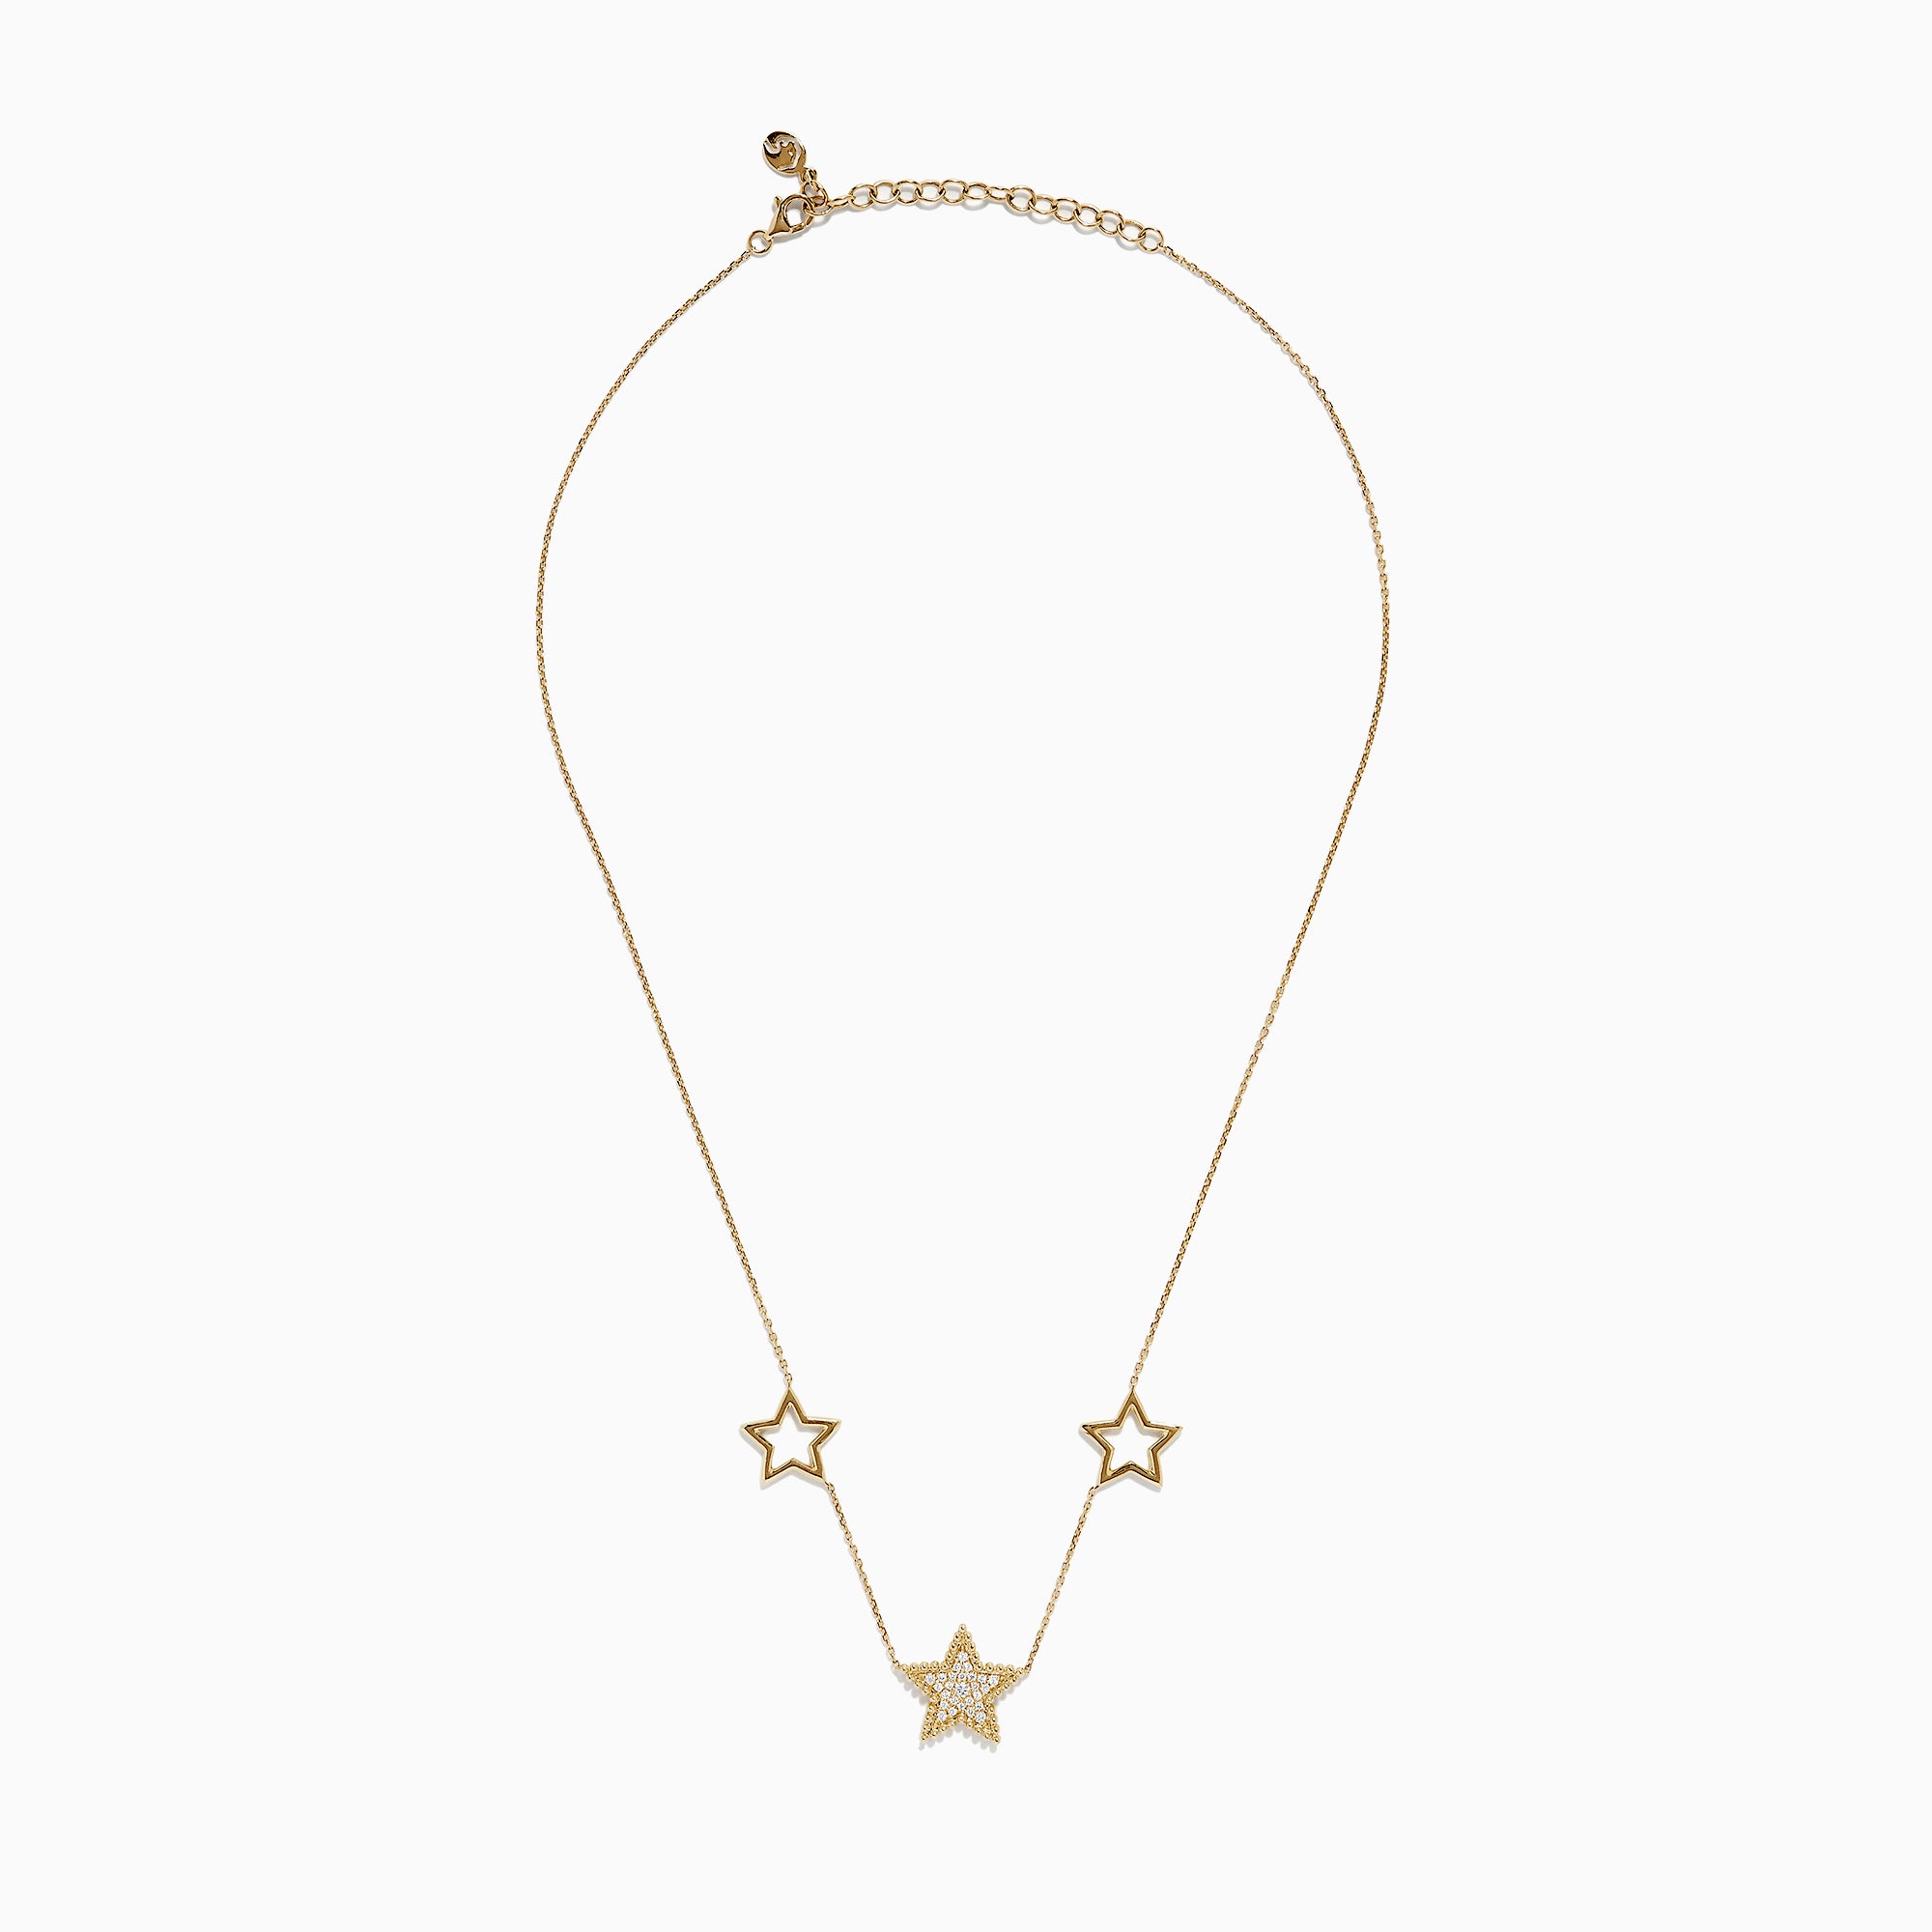 Effy Novelty 14K Yellow Gold Diamond Star Necklace, 0.16 TCW